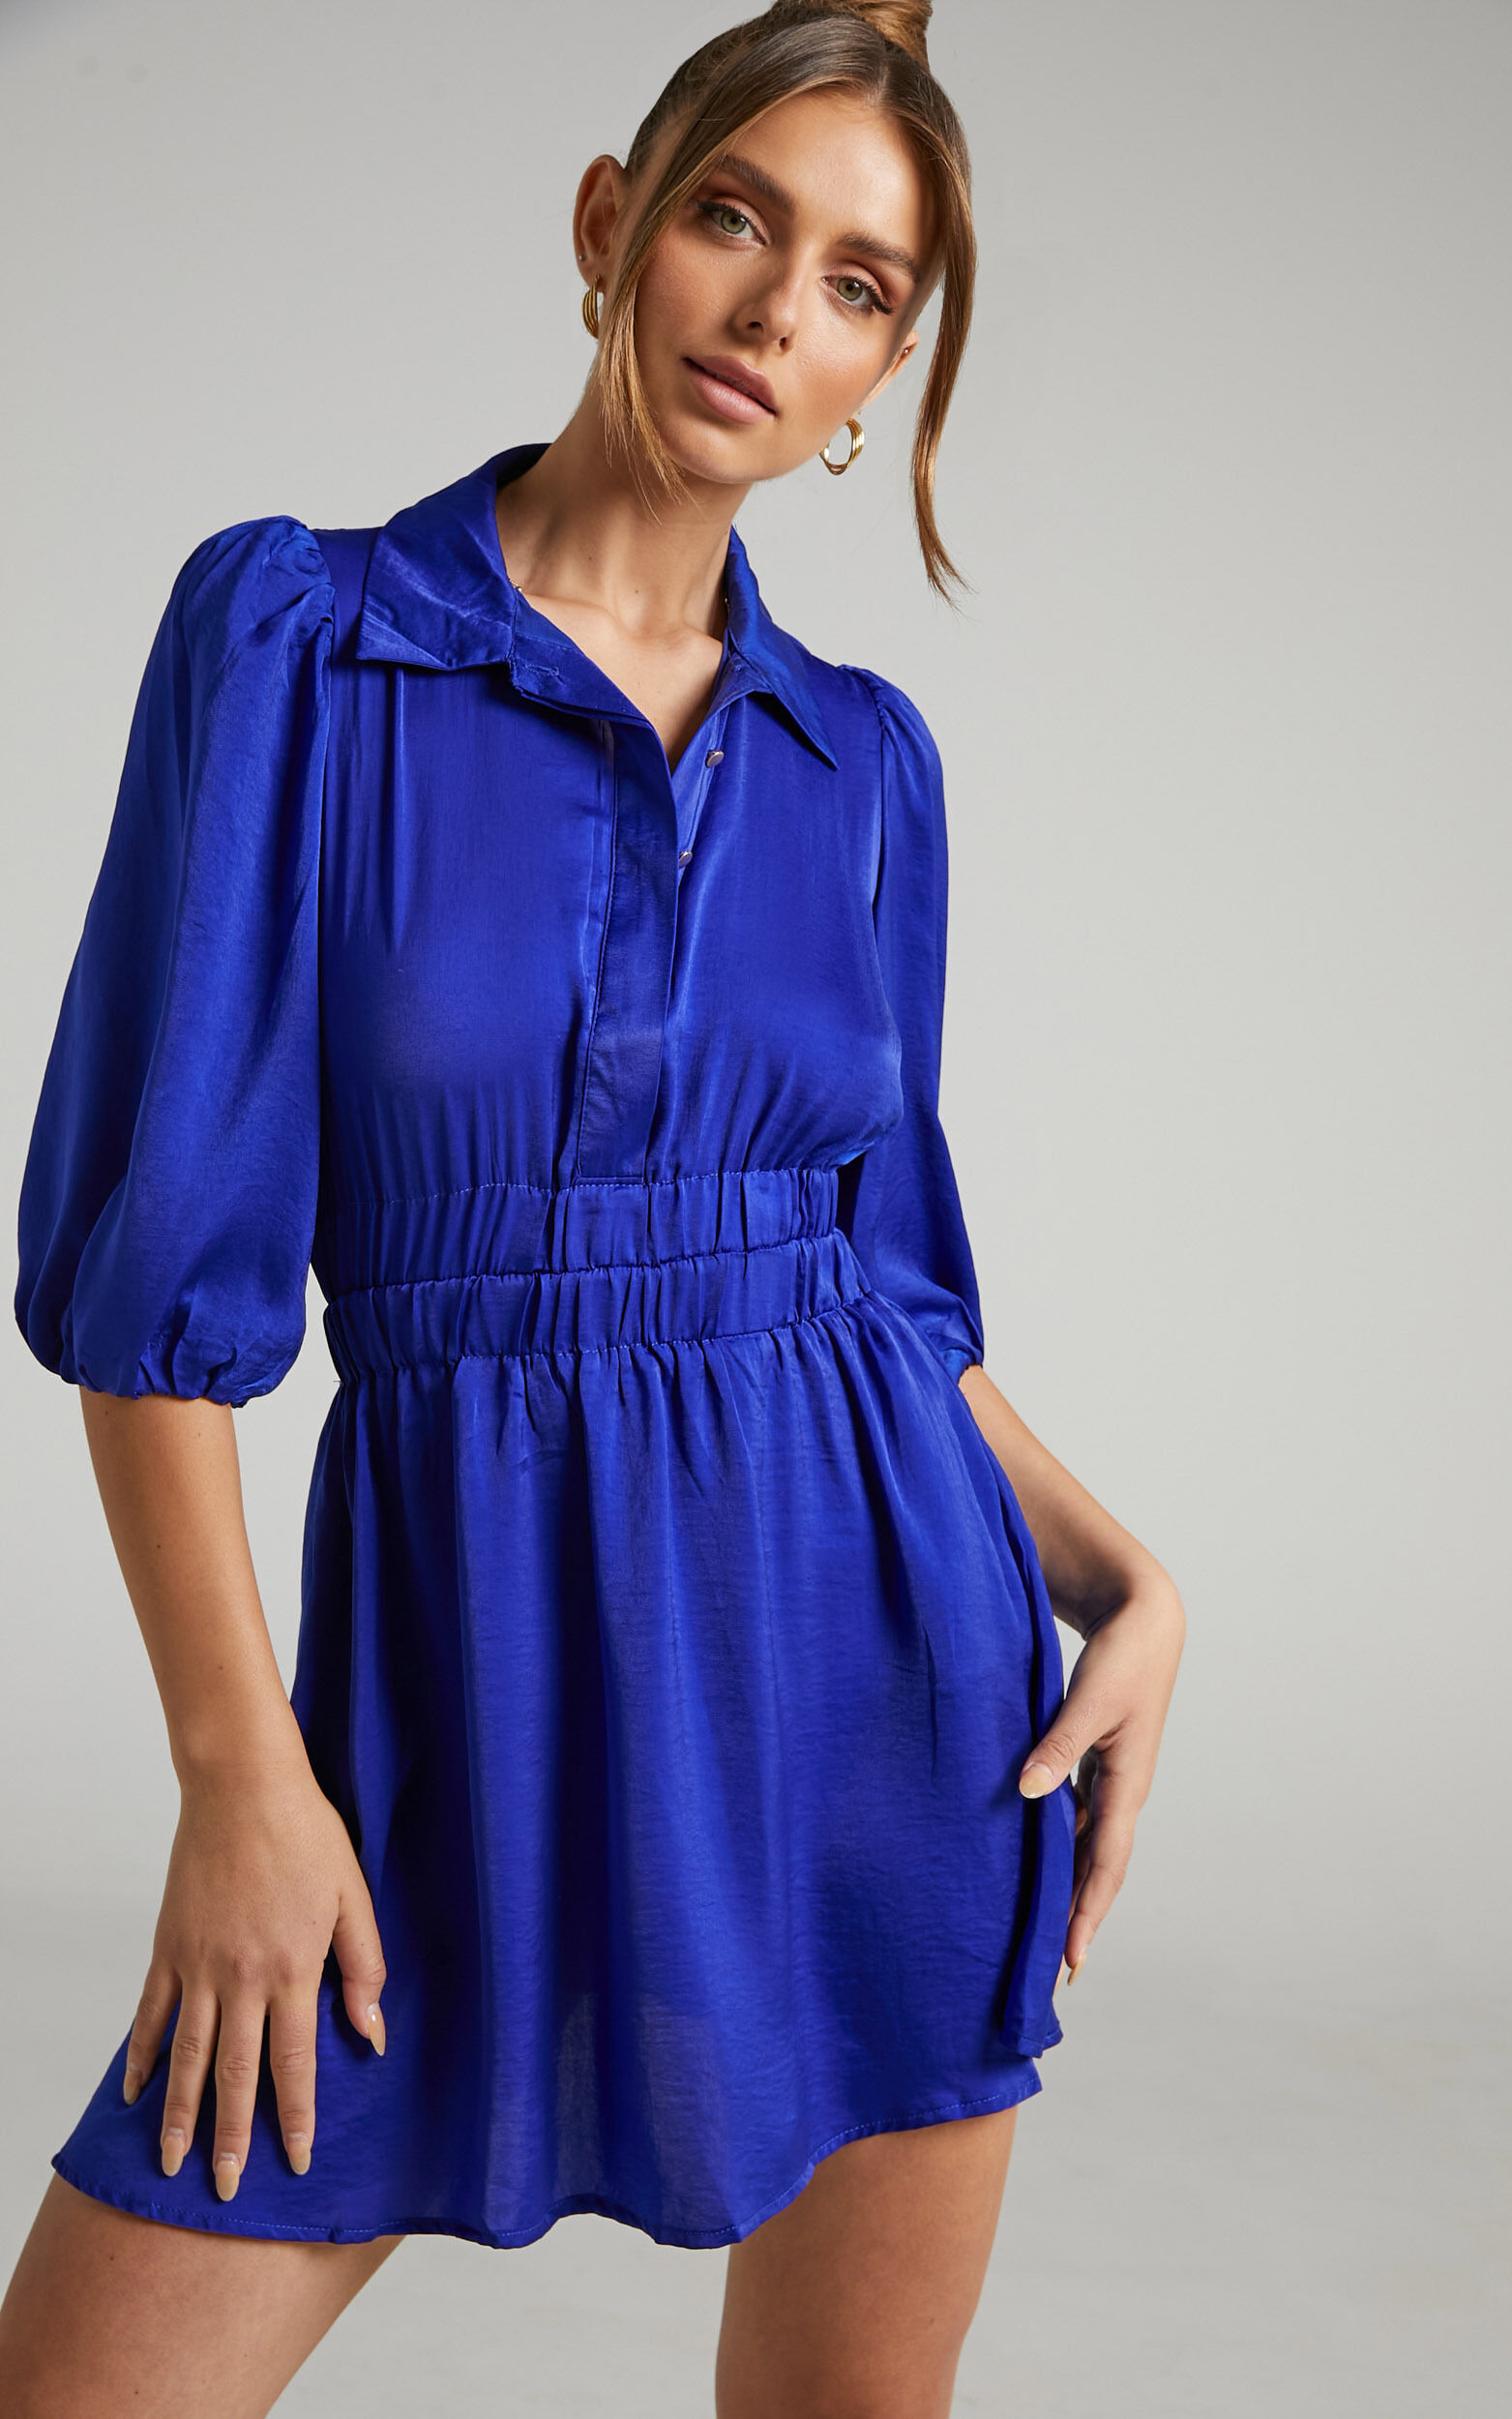 Raicy Collared Shirred Waist Mini Dress in Blue - 04, BLU2, super-hi-res image number null